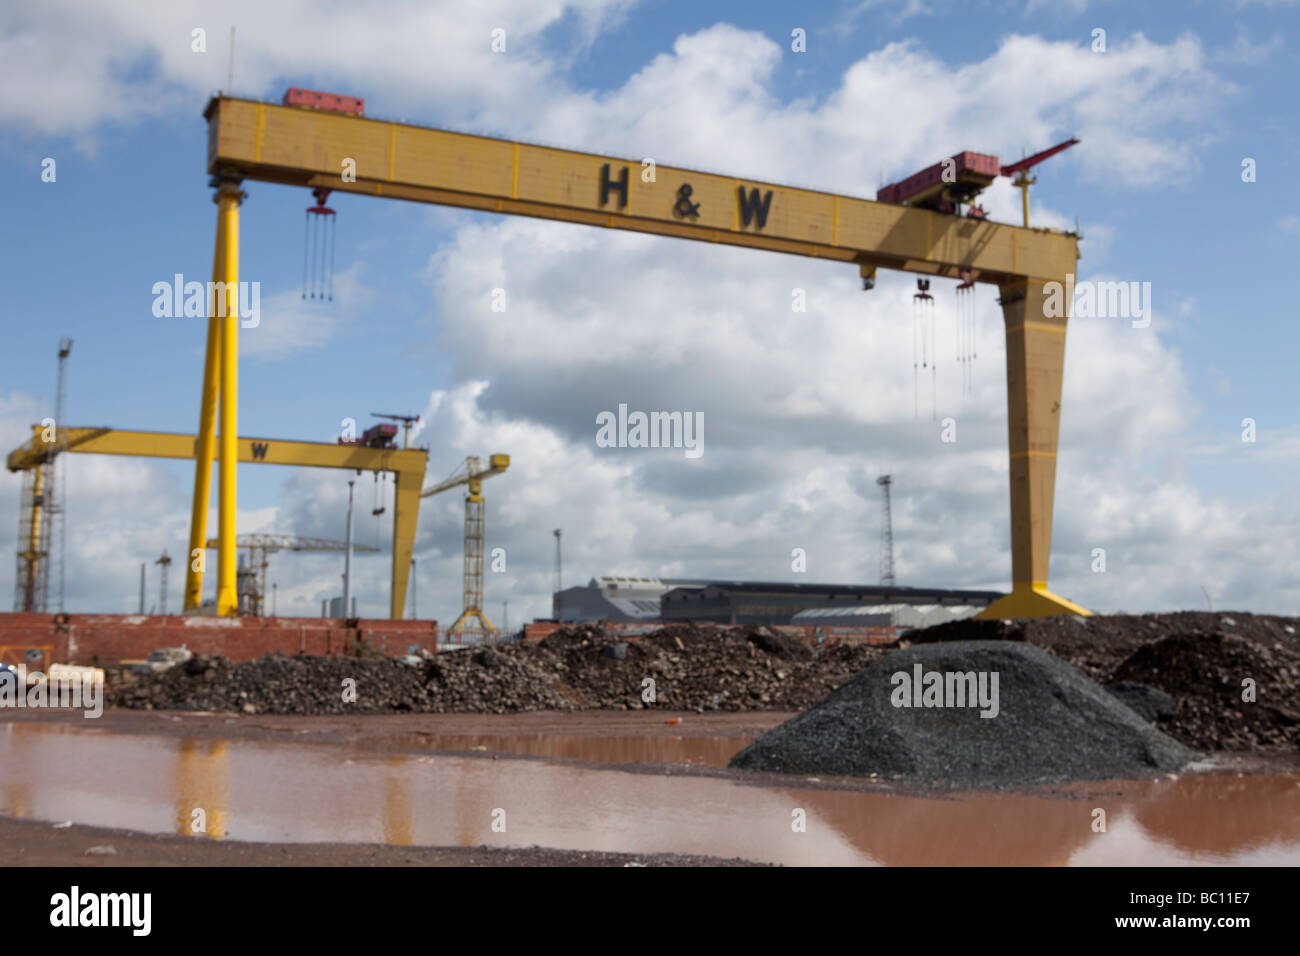 Samson and Goliath in Harland Wolff Shipyard, Queen's Island, Belfast, Northern Ireland, United Kingdom Stock Photo